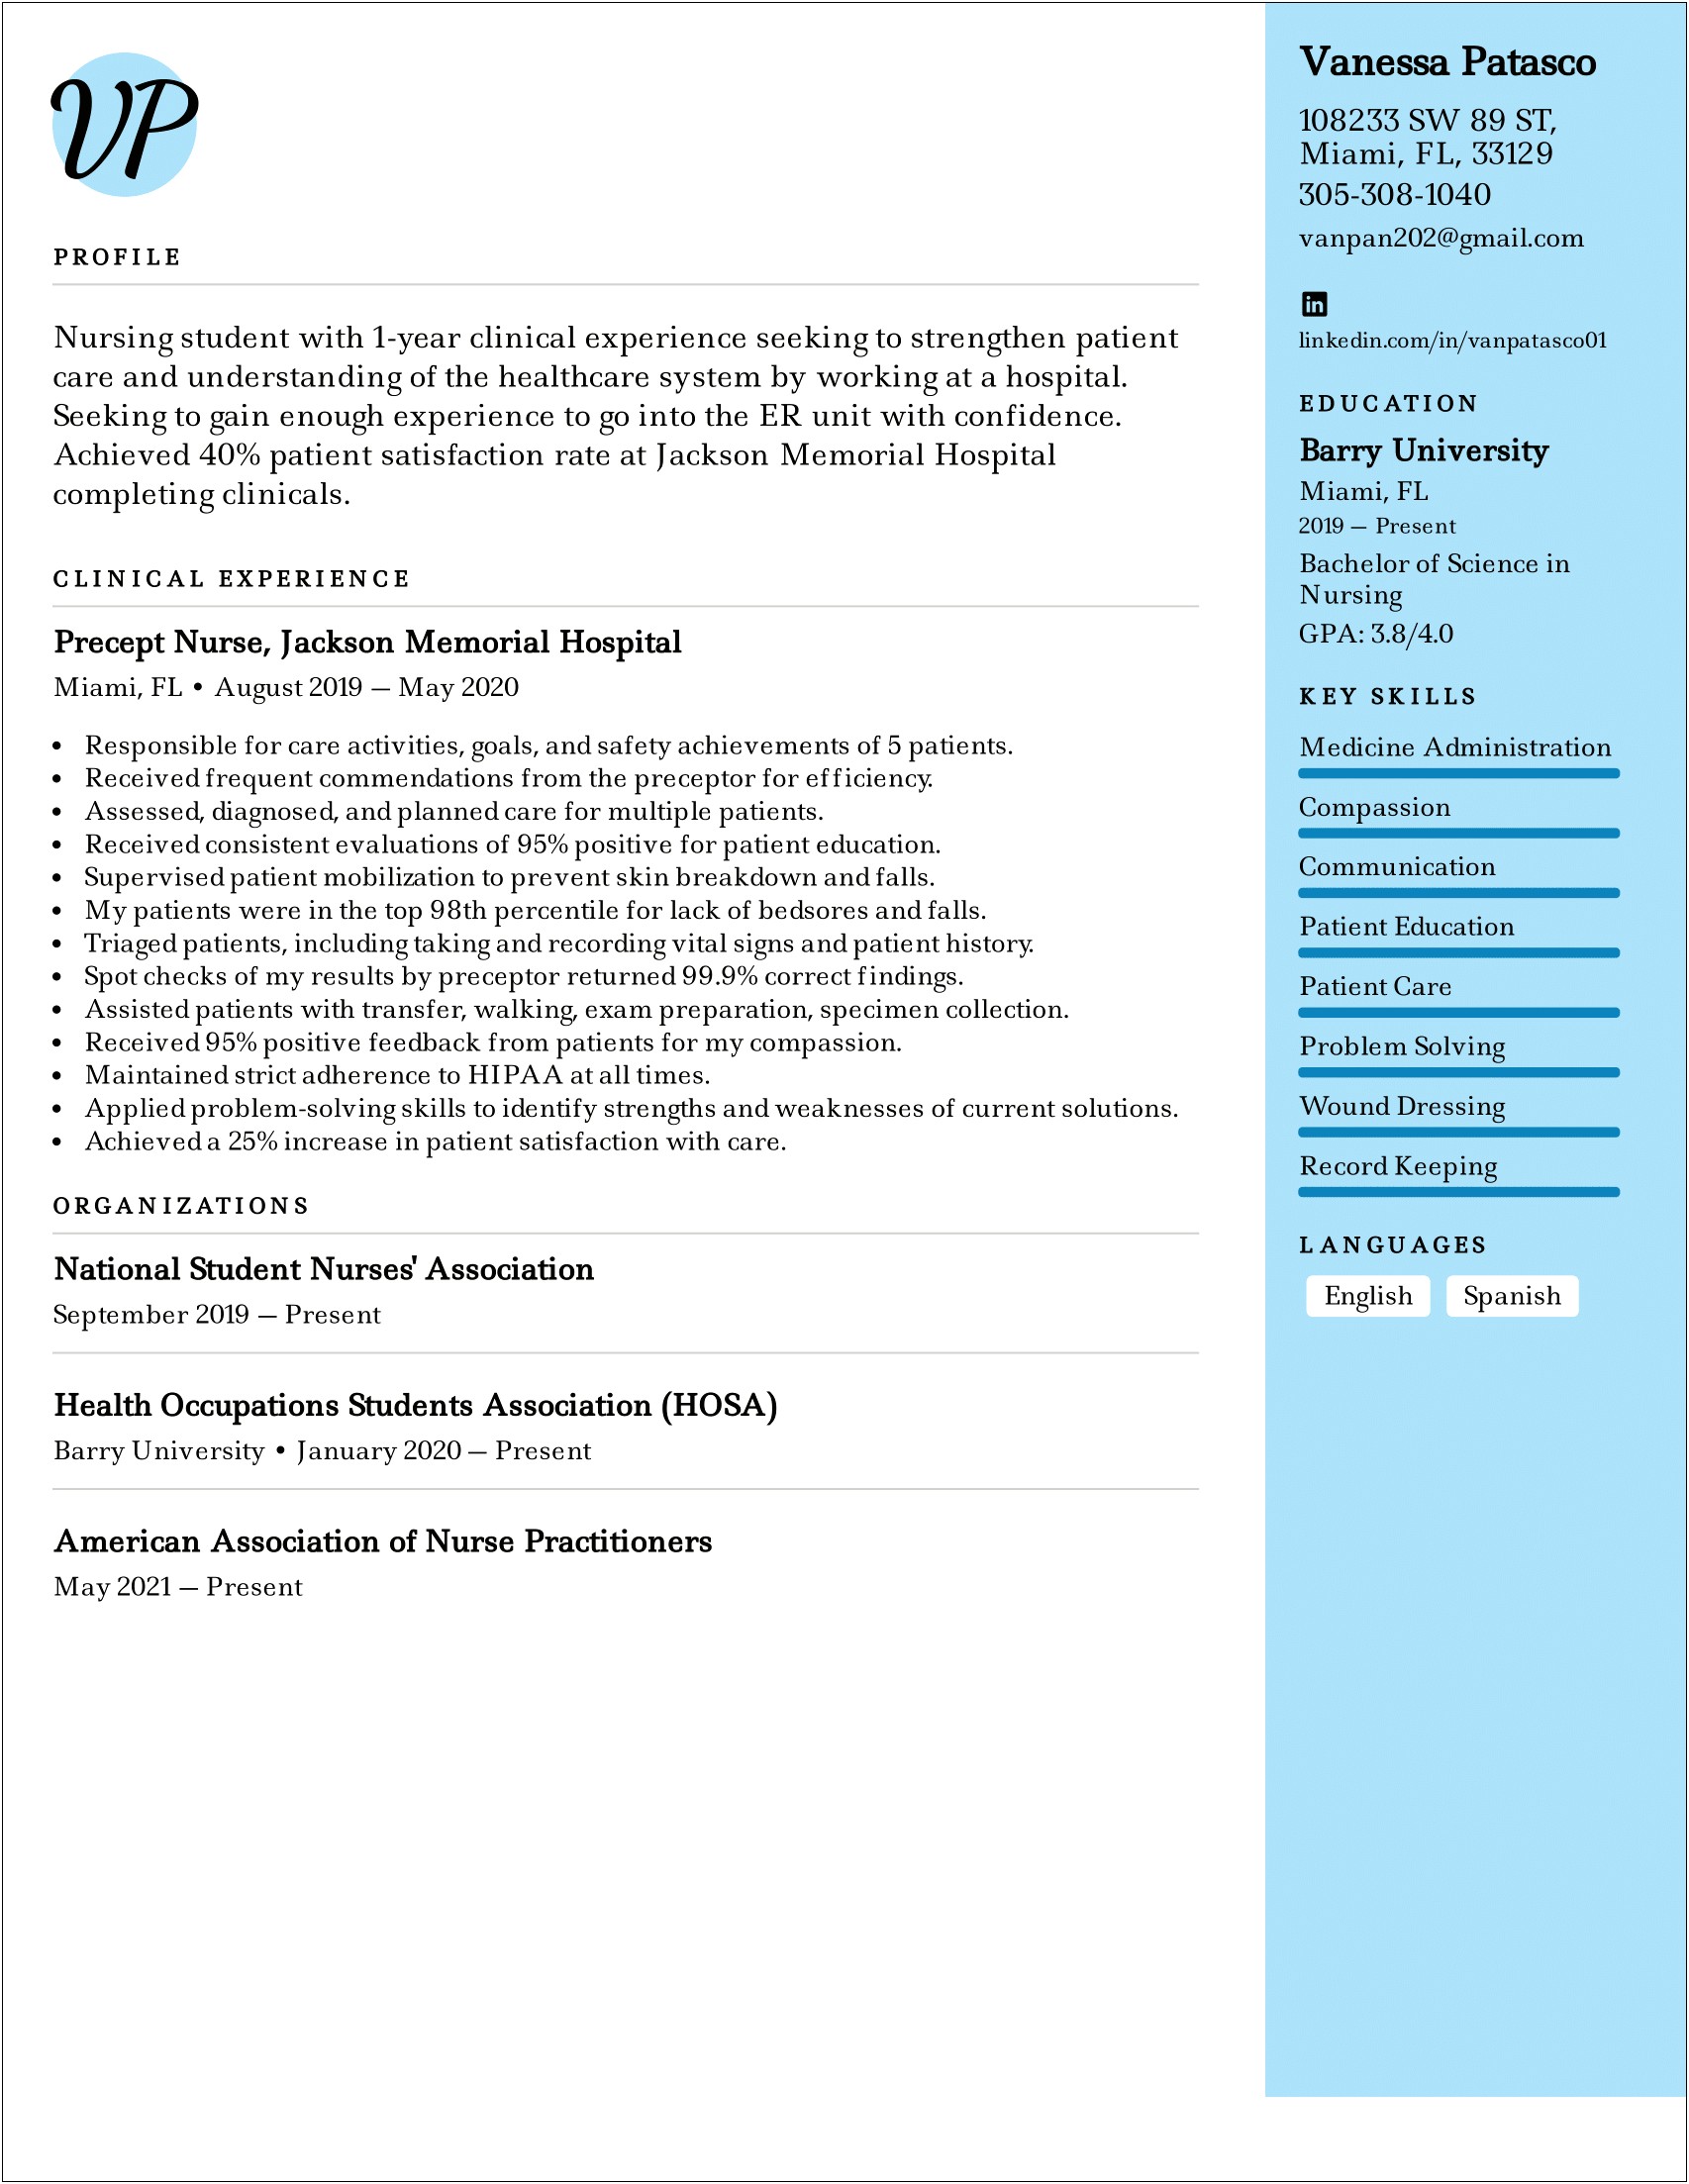 Describe Nurse Practitioner Clinical Experience Resume